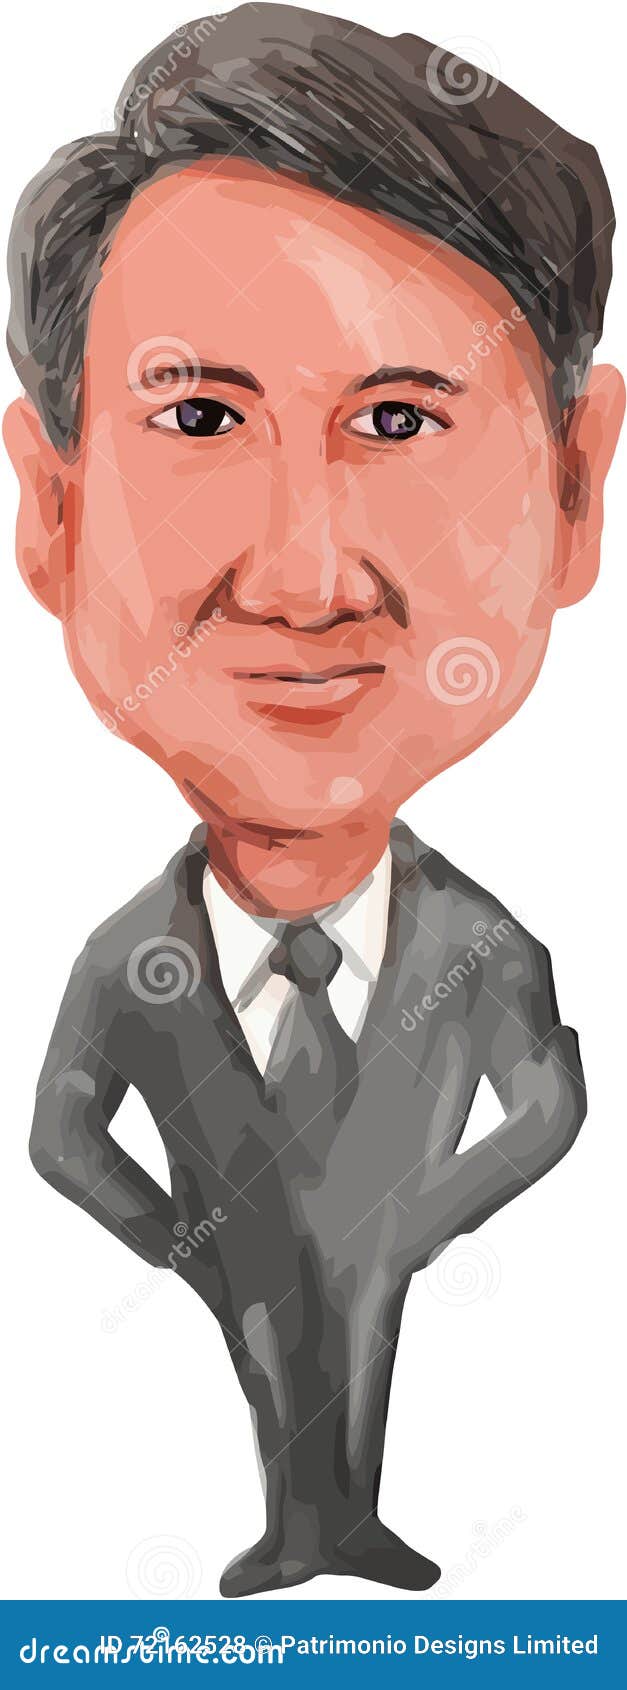 Justin Trudeau Prime Minister Canada Editorial Stock Photo - Illustration  of caricature, politician: 72162528